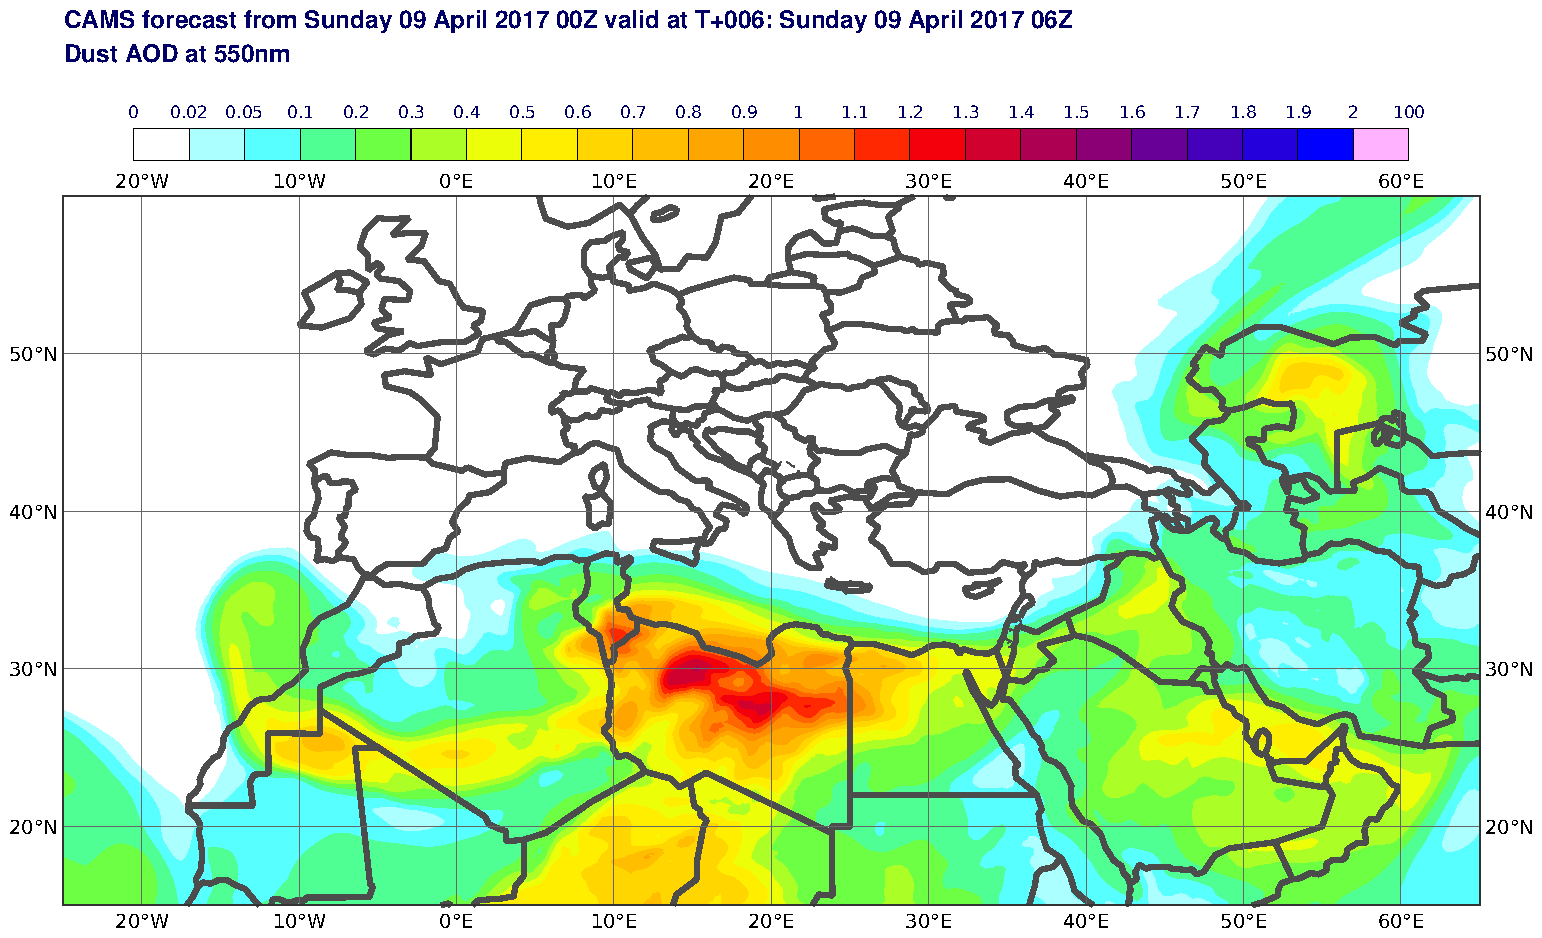 Dust AOD at 550nm valid at T6 - 2017-04-09 06:00